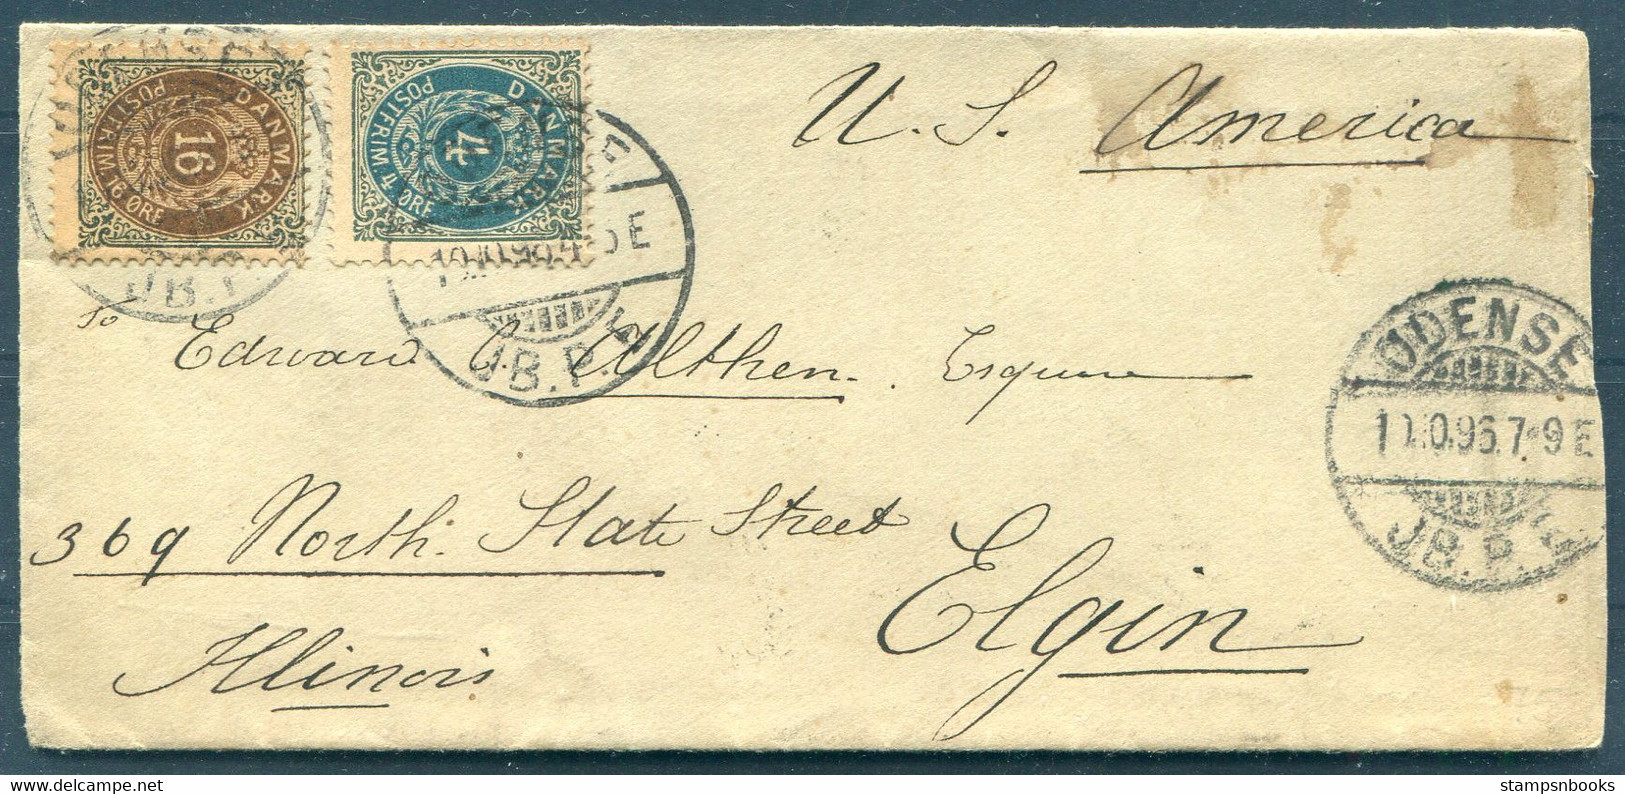 1896 Denmark 20ore Rate (16ore + 4ore) Odense J.B.P.E. Cover - Elgin Illinois USA Via New York. - Covers & Documents